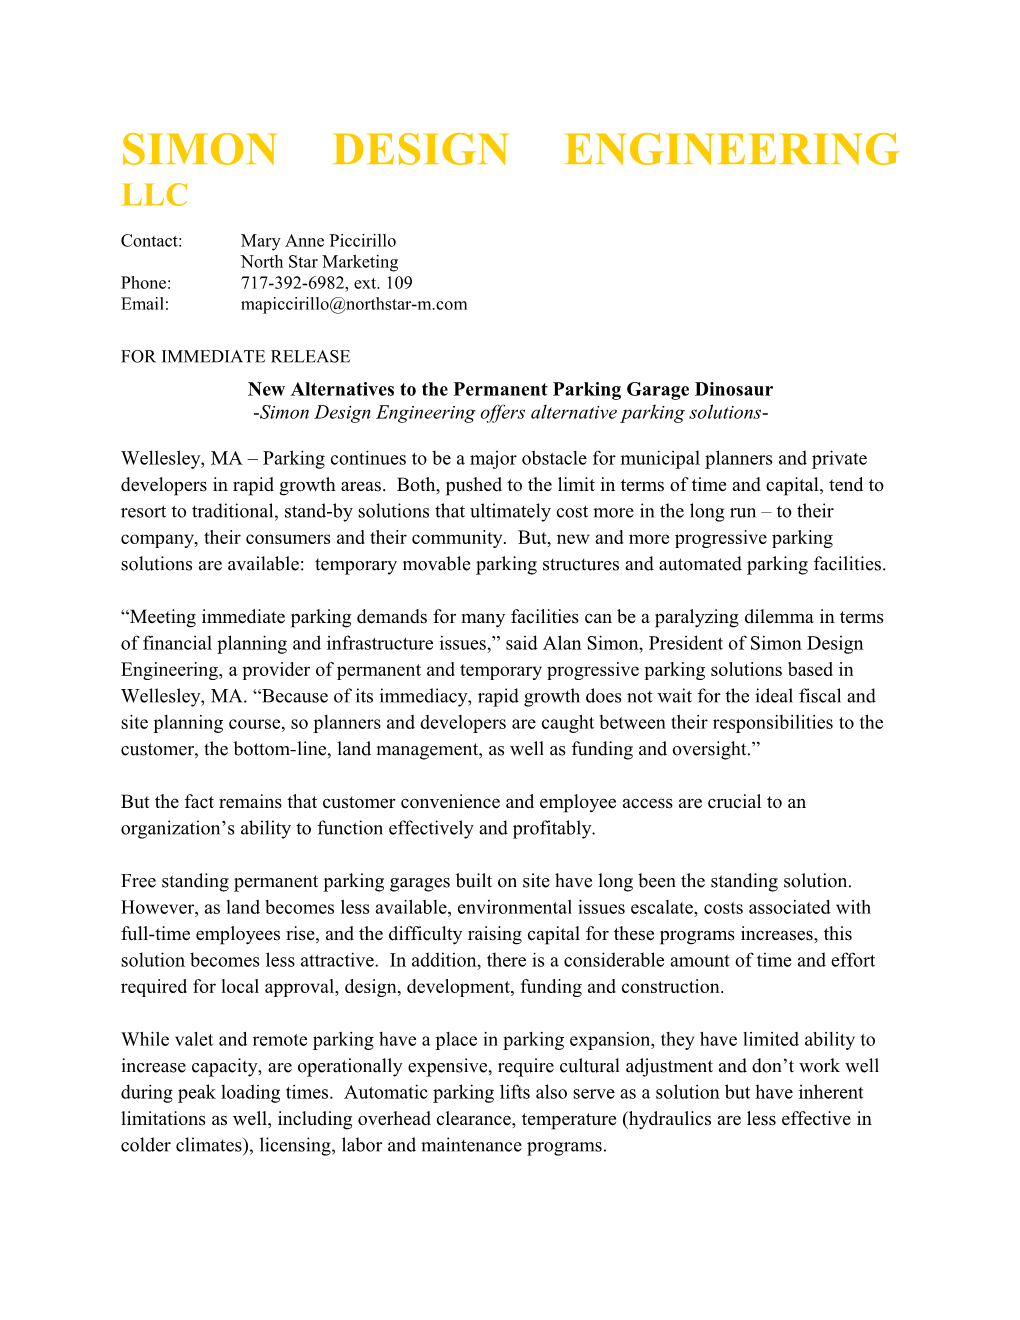 Simon Design Engineeringllc